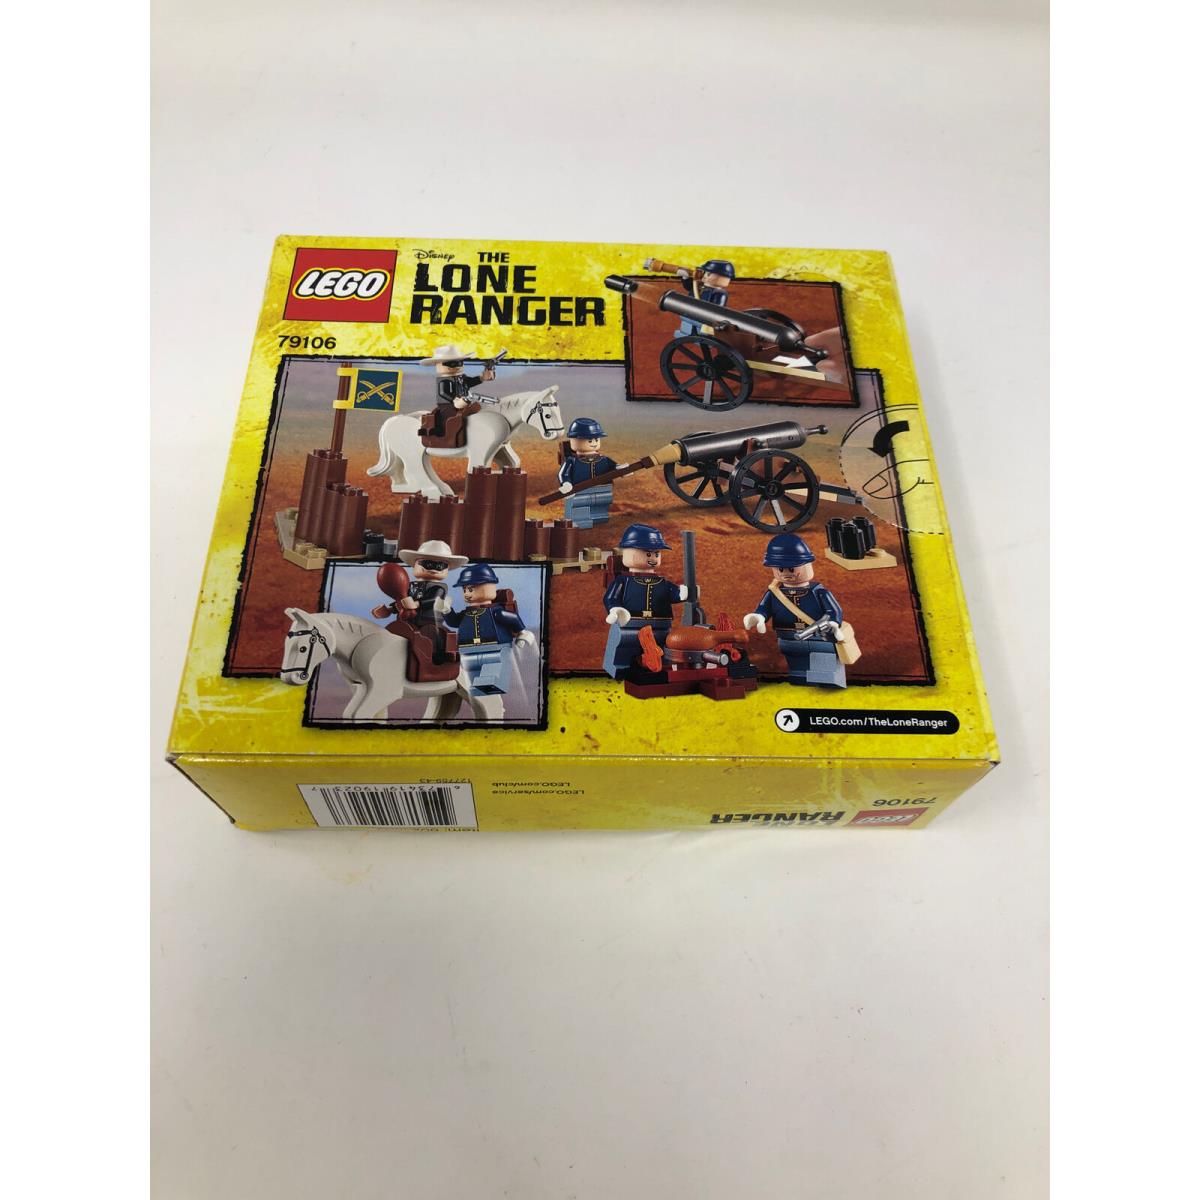 Lego The Lone Ranger Cavalry Builder Set 79106